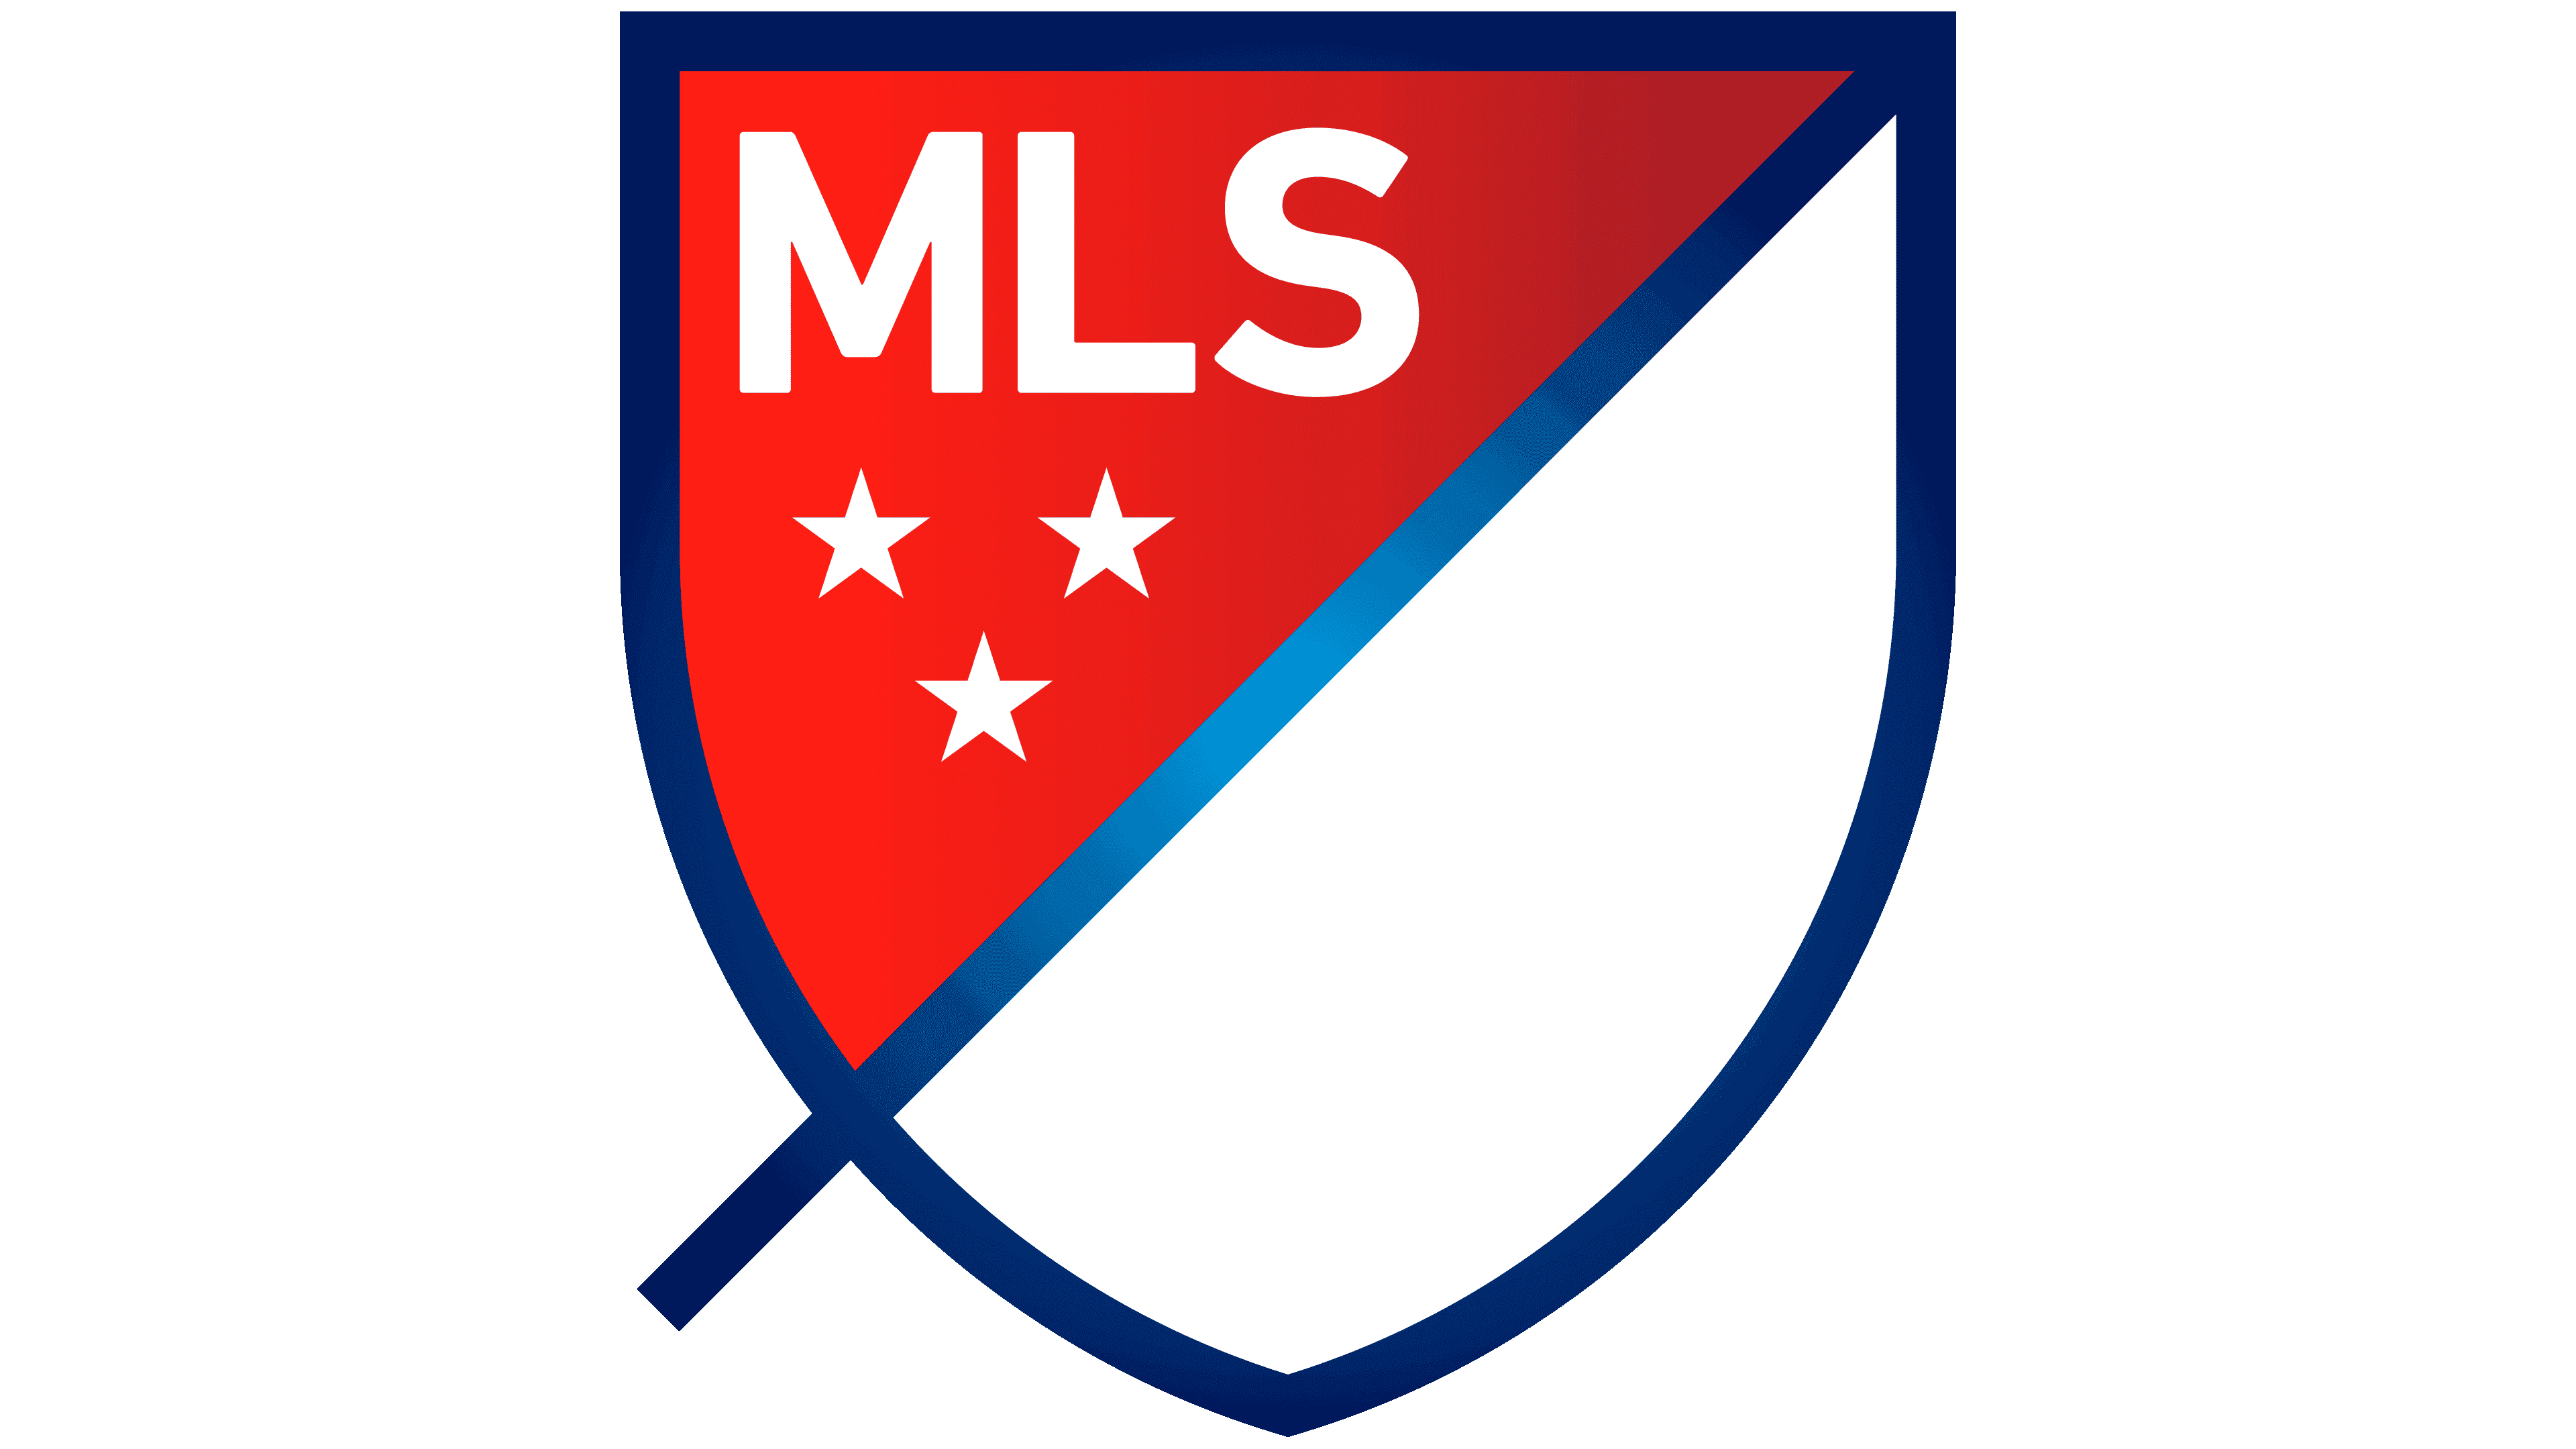 MLS (Major League Soccer) Logo